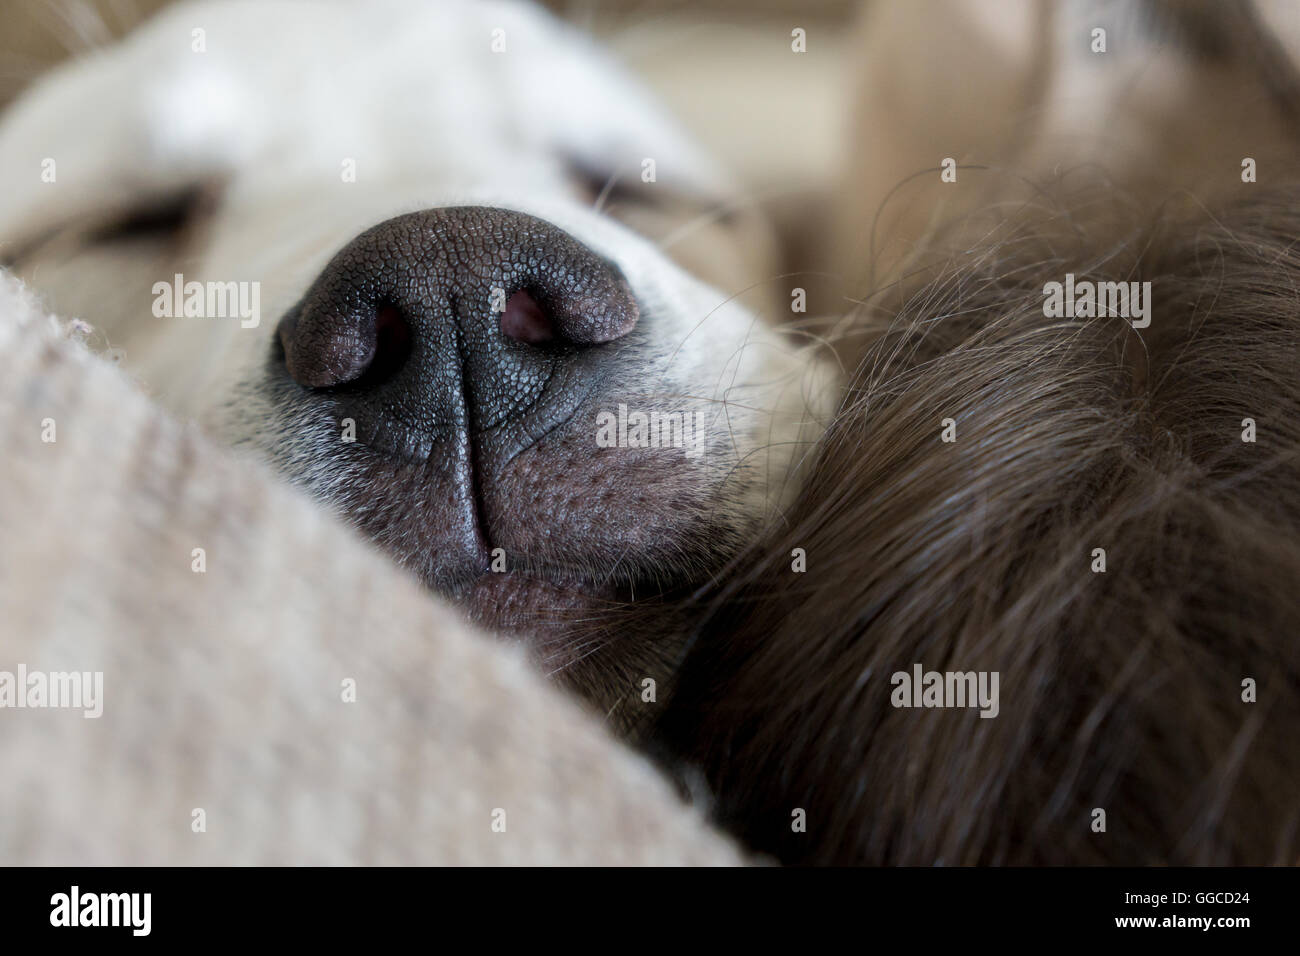 Sleeping Dog with black nose on snoring Stock Photo